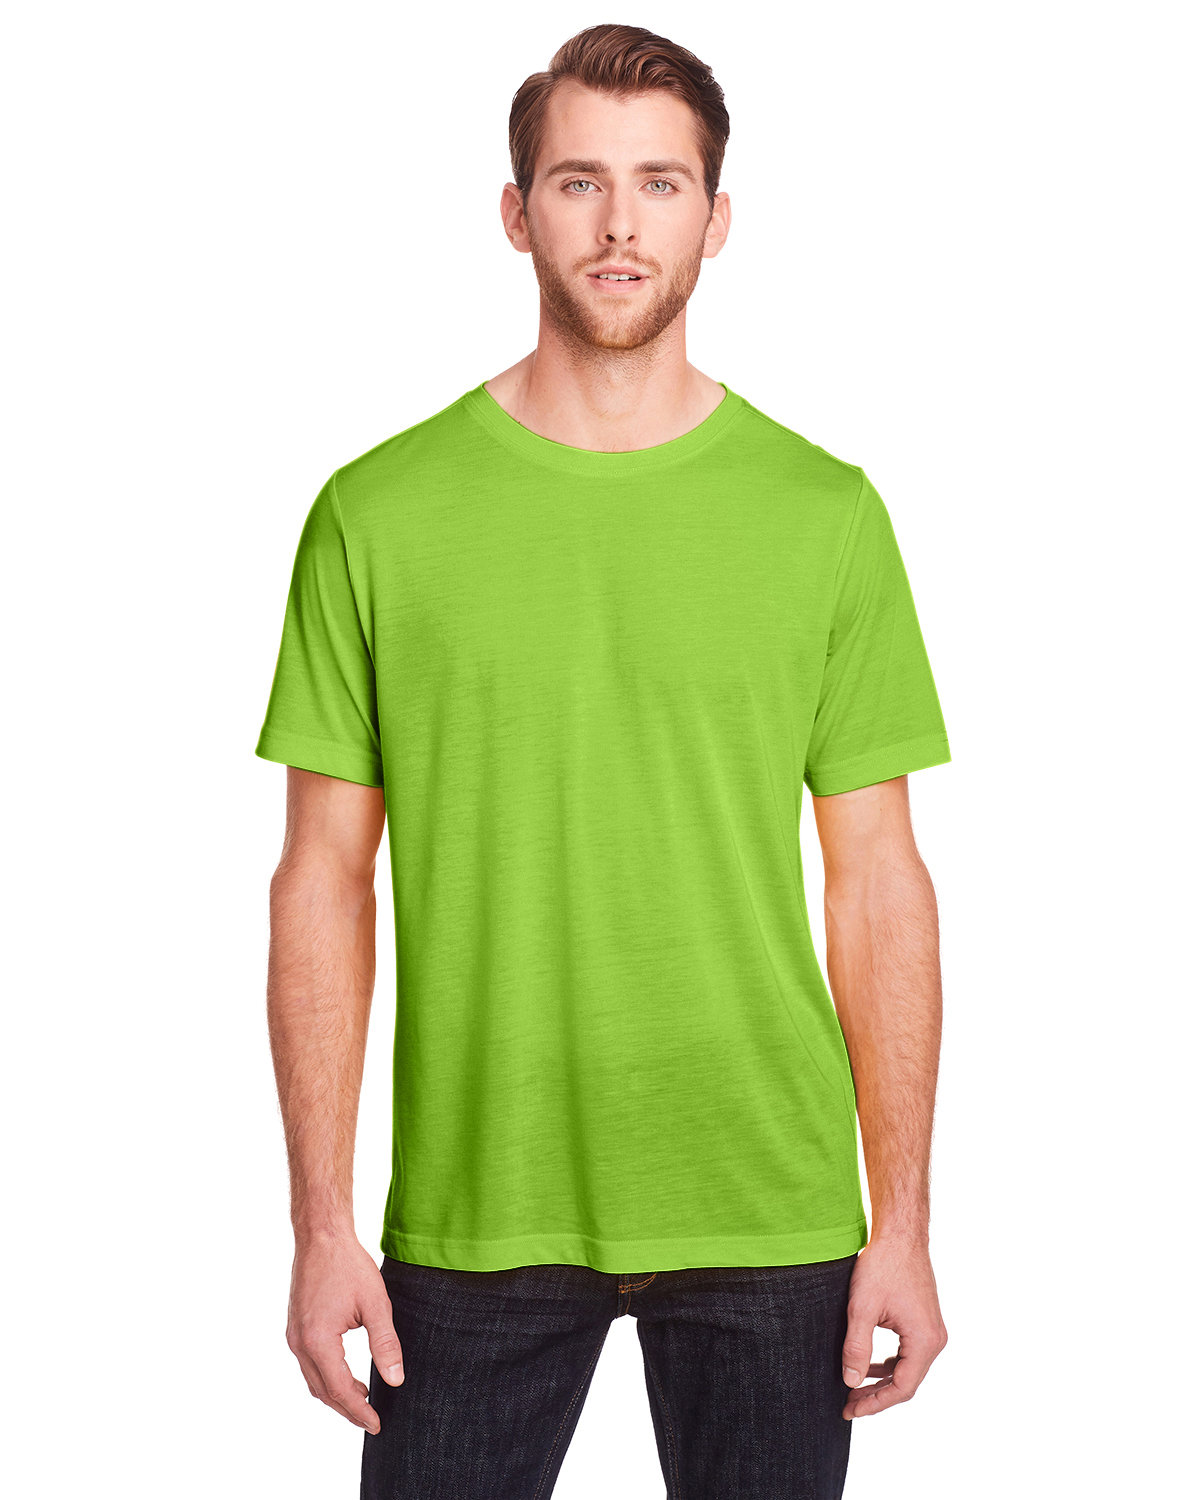 Core 365 Adult Fusion ChromaSoft Performance T-Shirt ACID GREEN 